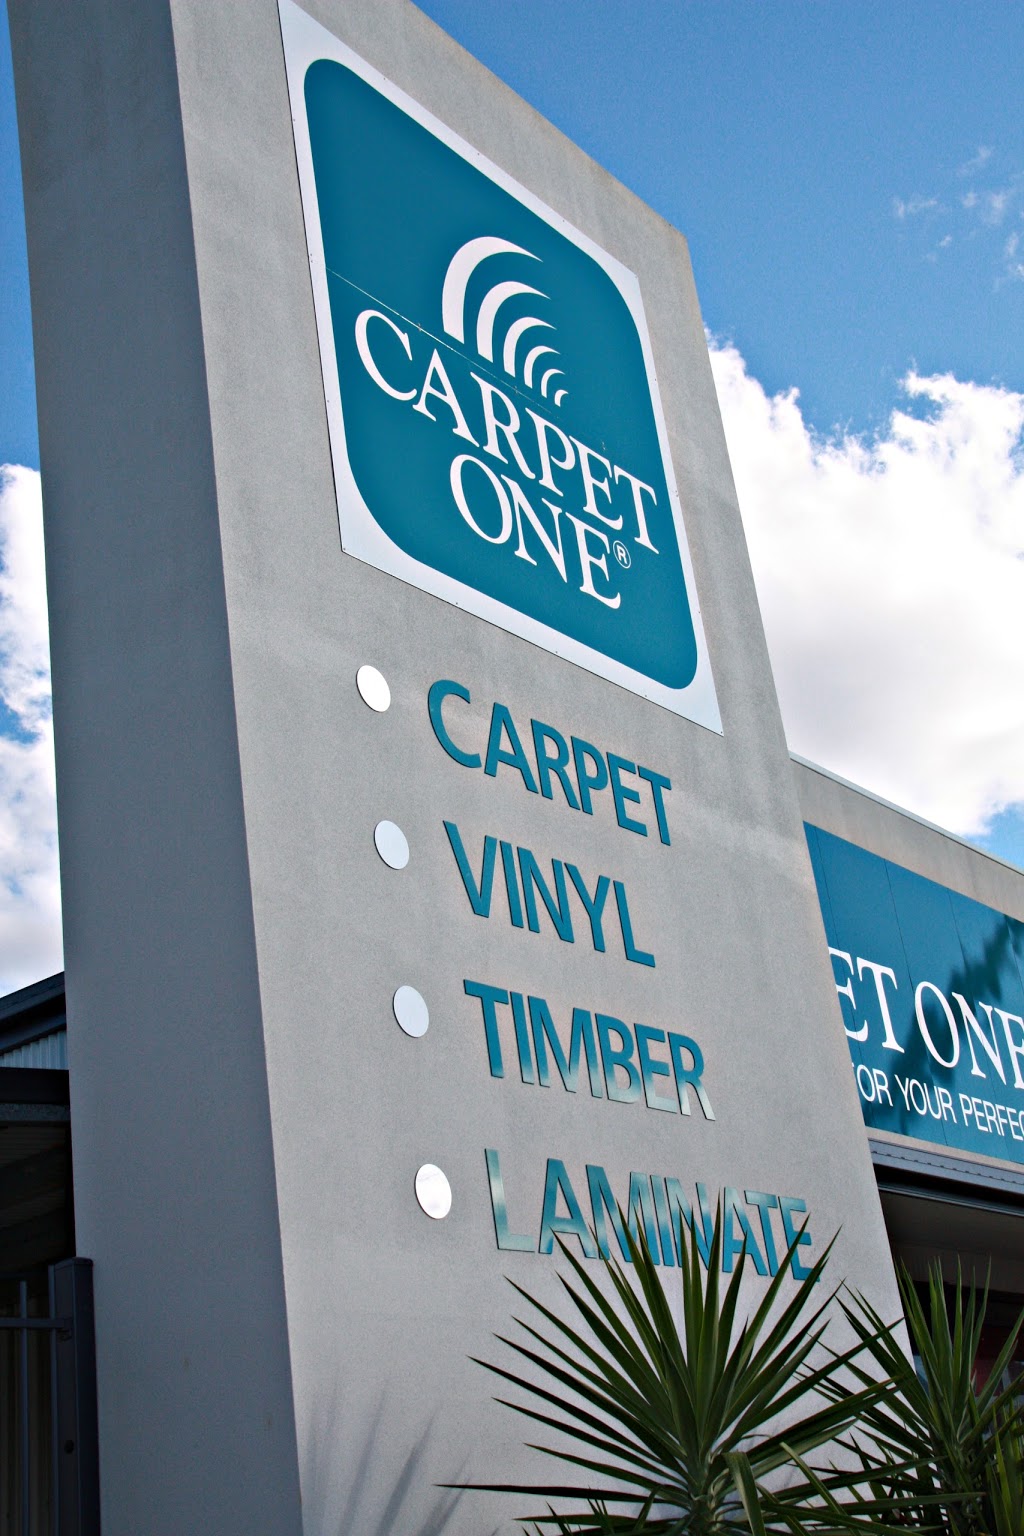 Allens Carpet One | home goods store | 15 Hicks St, Emerald QLD 4720, Australia | 0749821571 OR +61 7 4982 1571